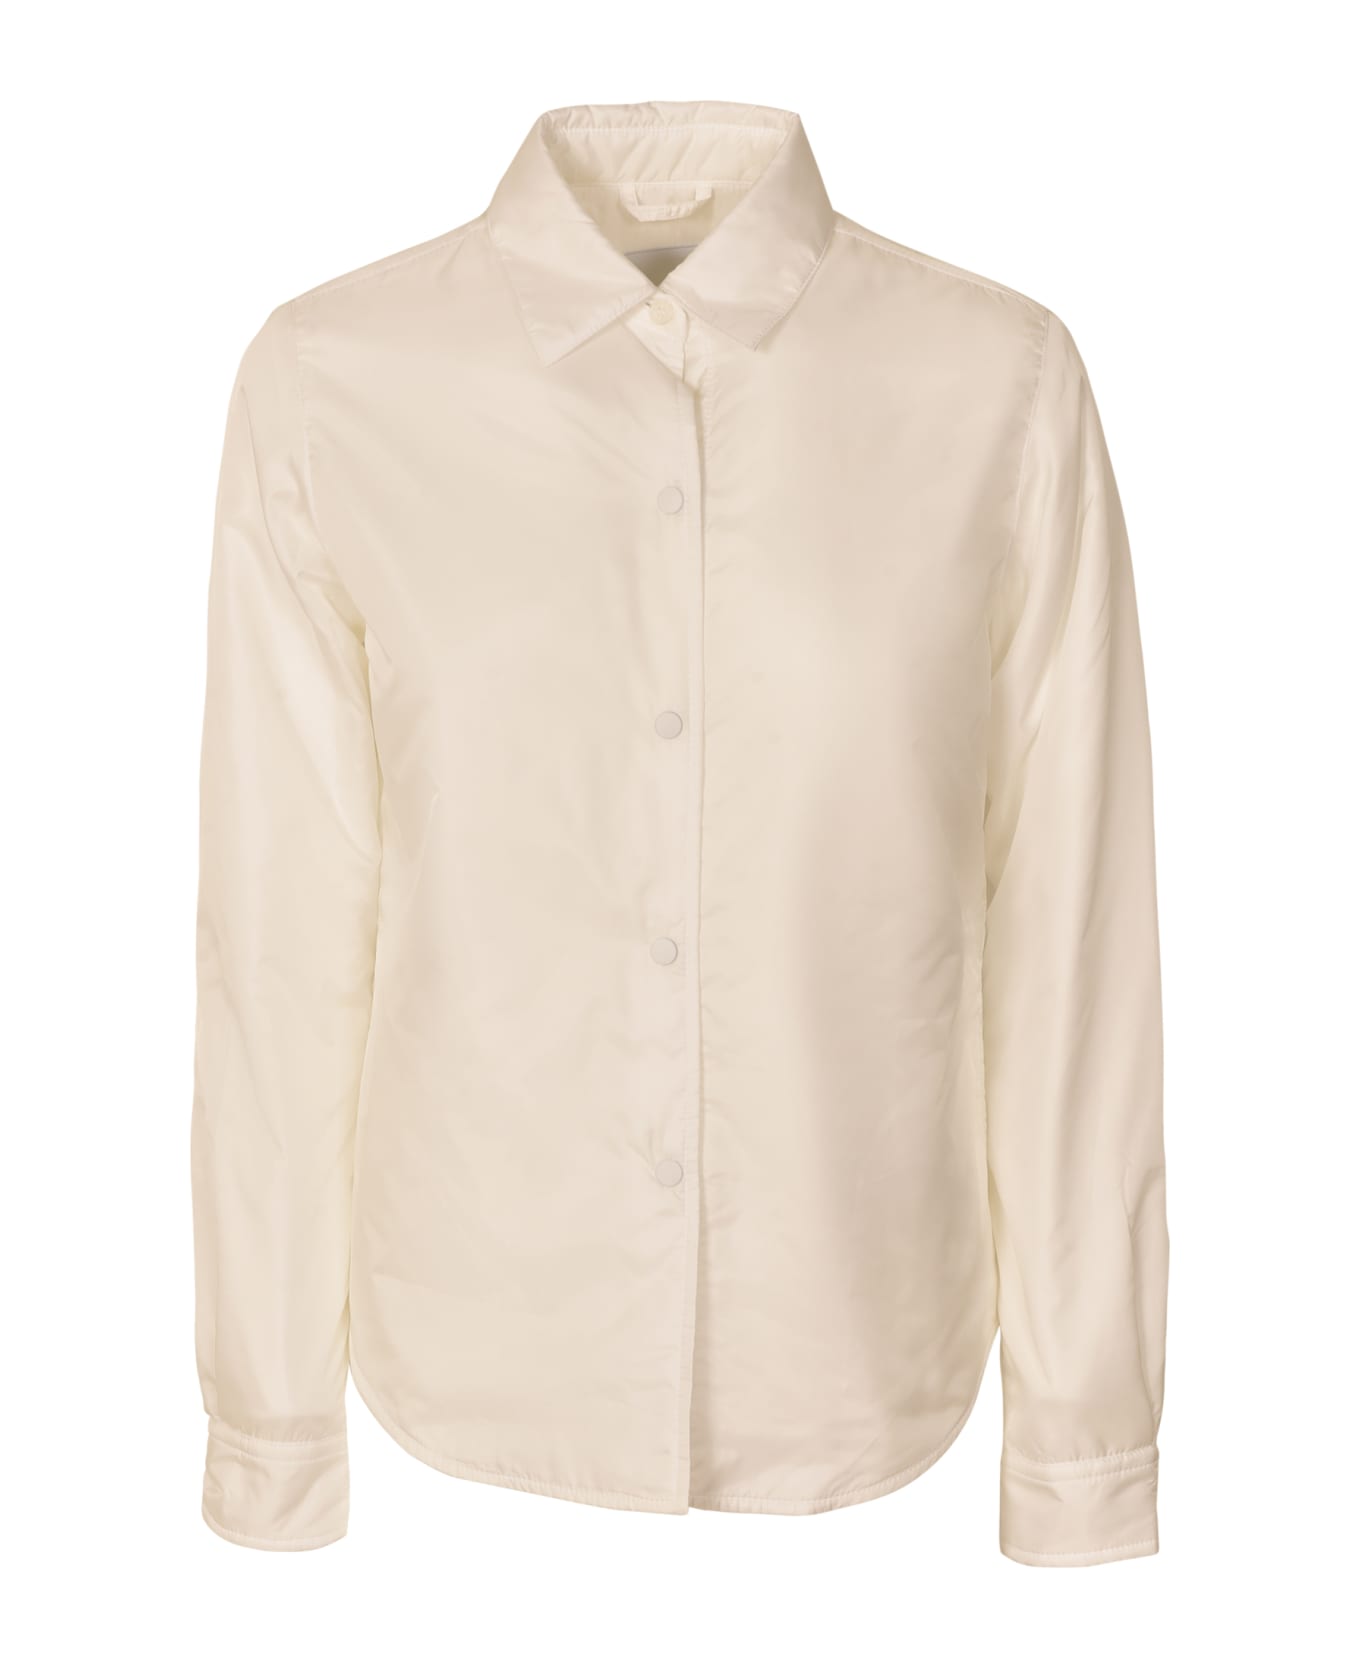 Aspesi Glue Shirt Jacket - Bianco シャツ